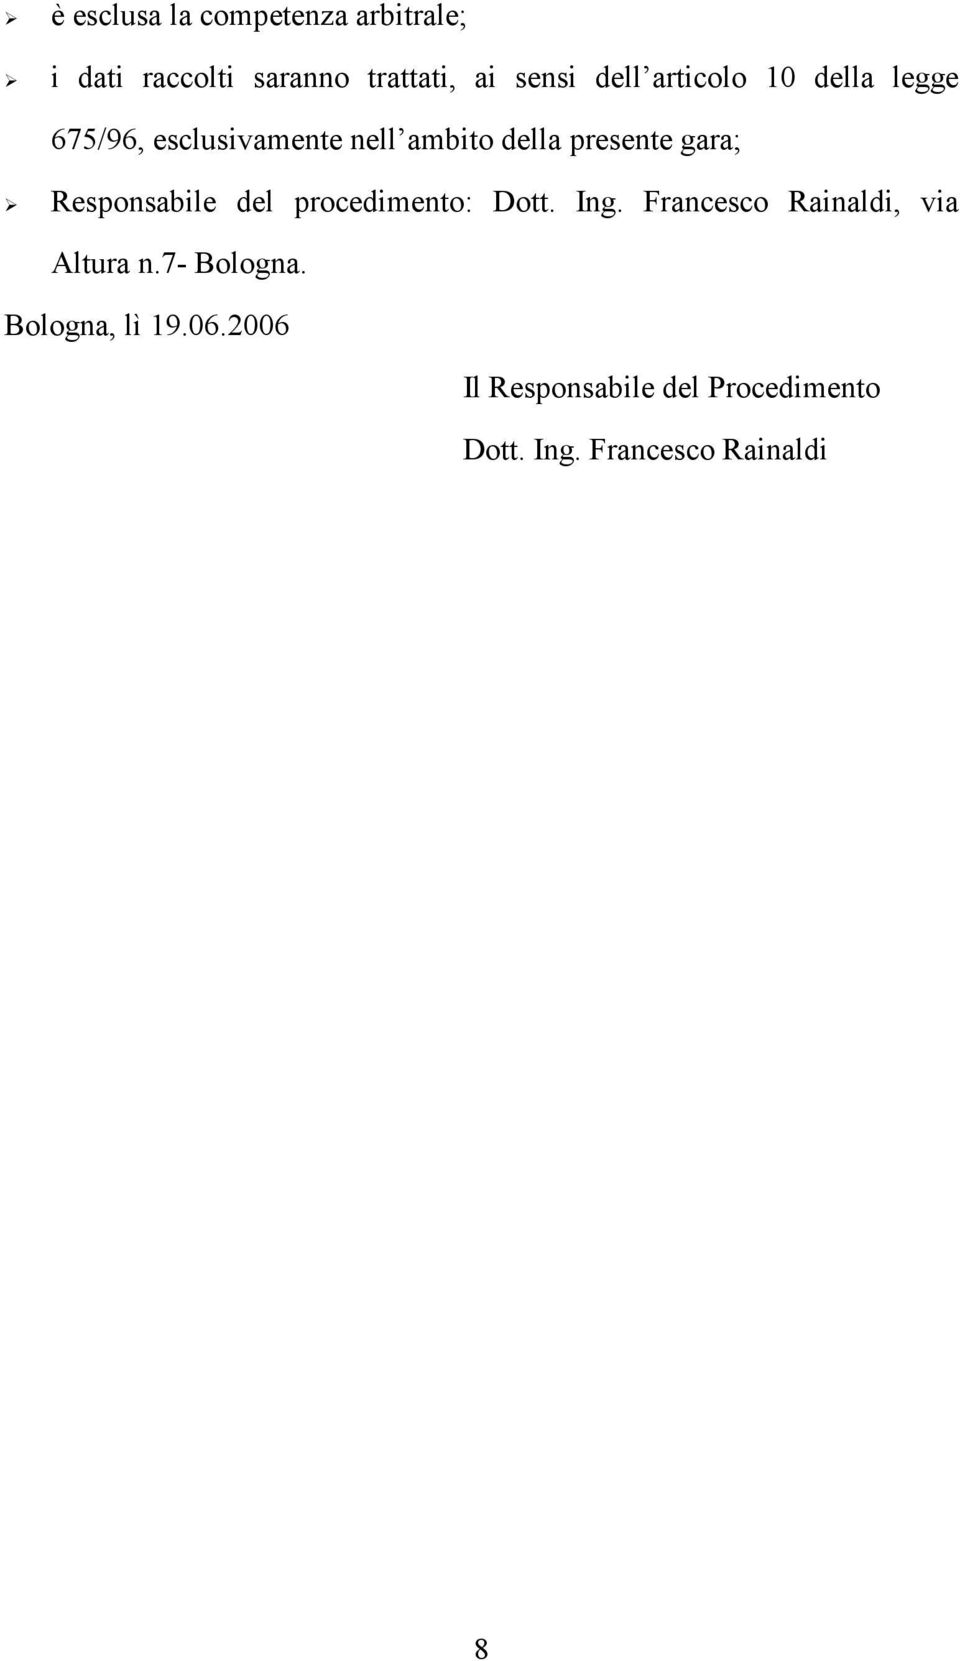 Responsabile del procedimento: Dott. Ing. Francesco Rainaldi, via Altura n.